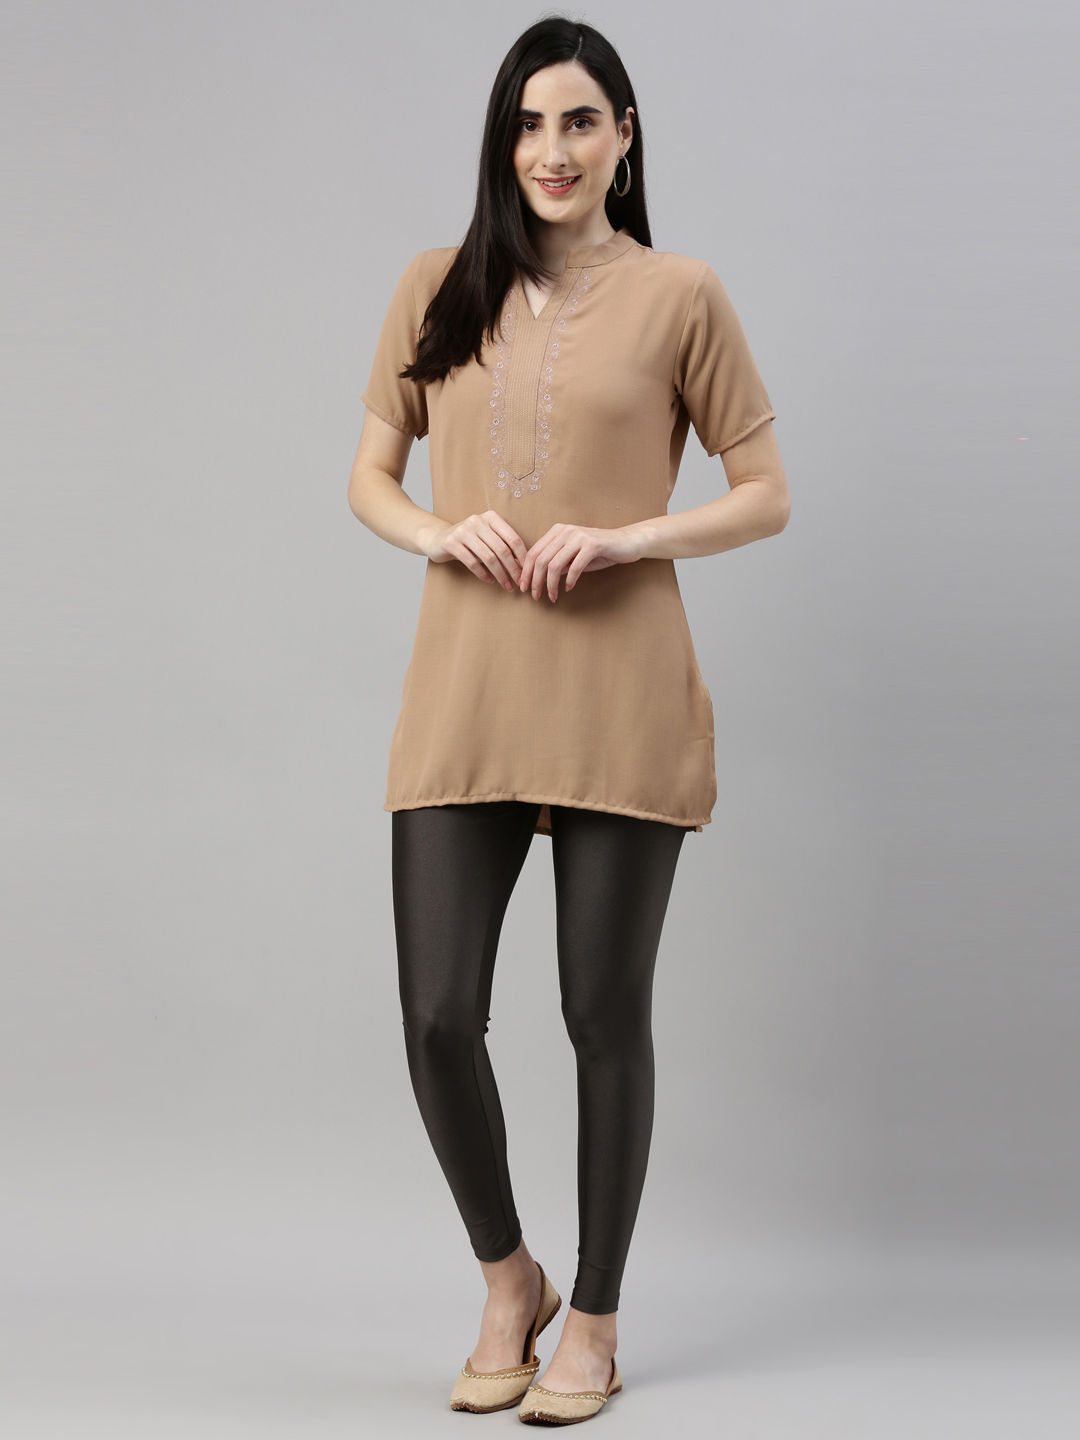 Buy GO COLORS Women Silver Mid Rise Nylon Shimmer Leggings - S at Amazon.in